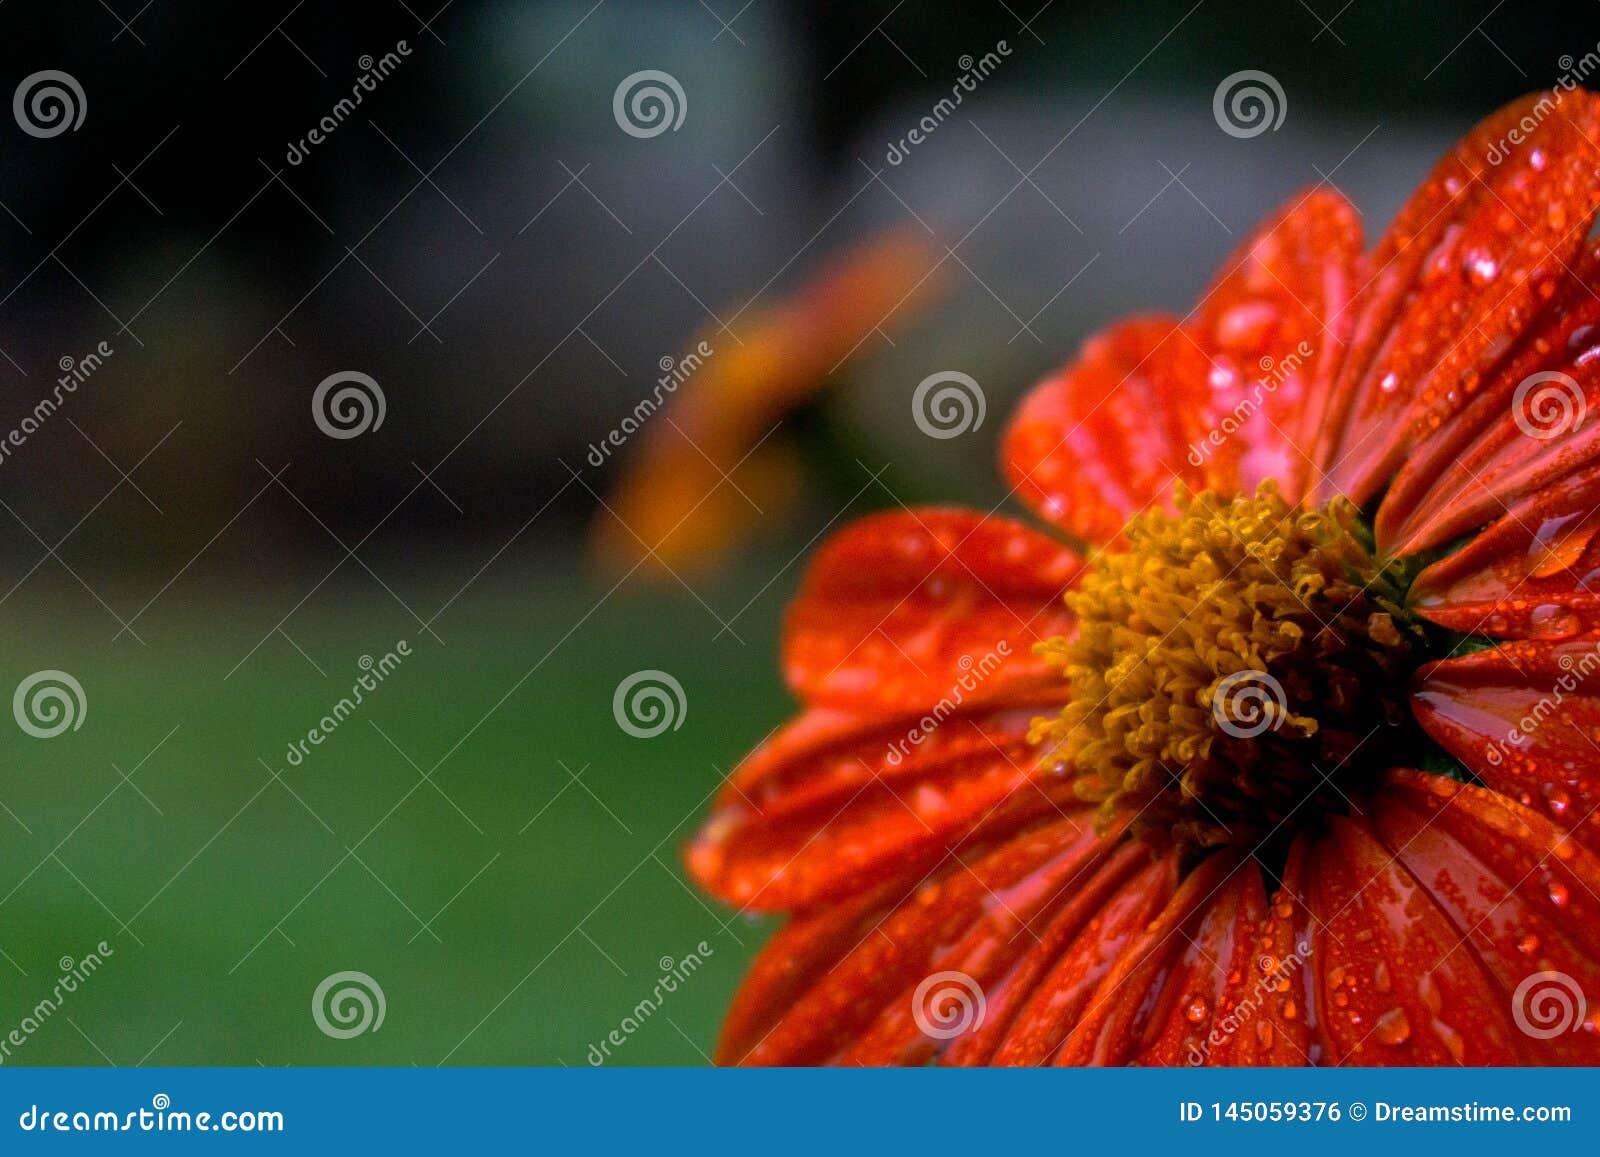 macro photograph of an orange flower